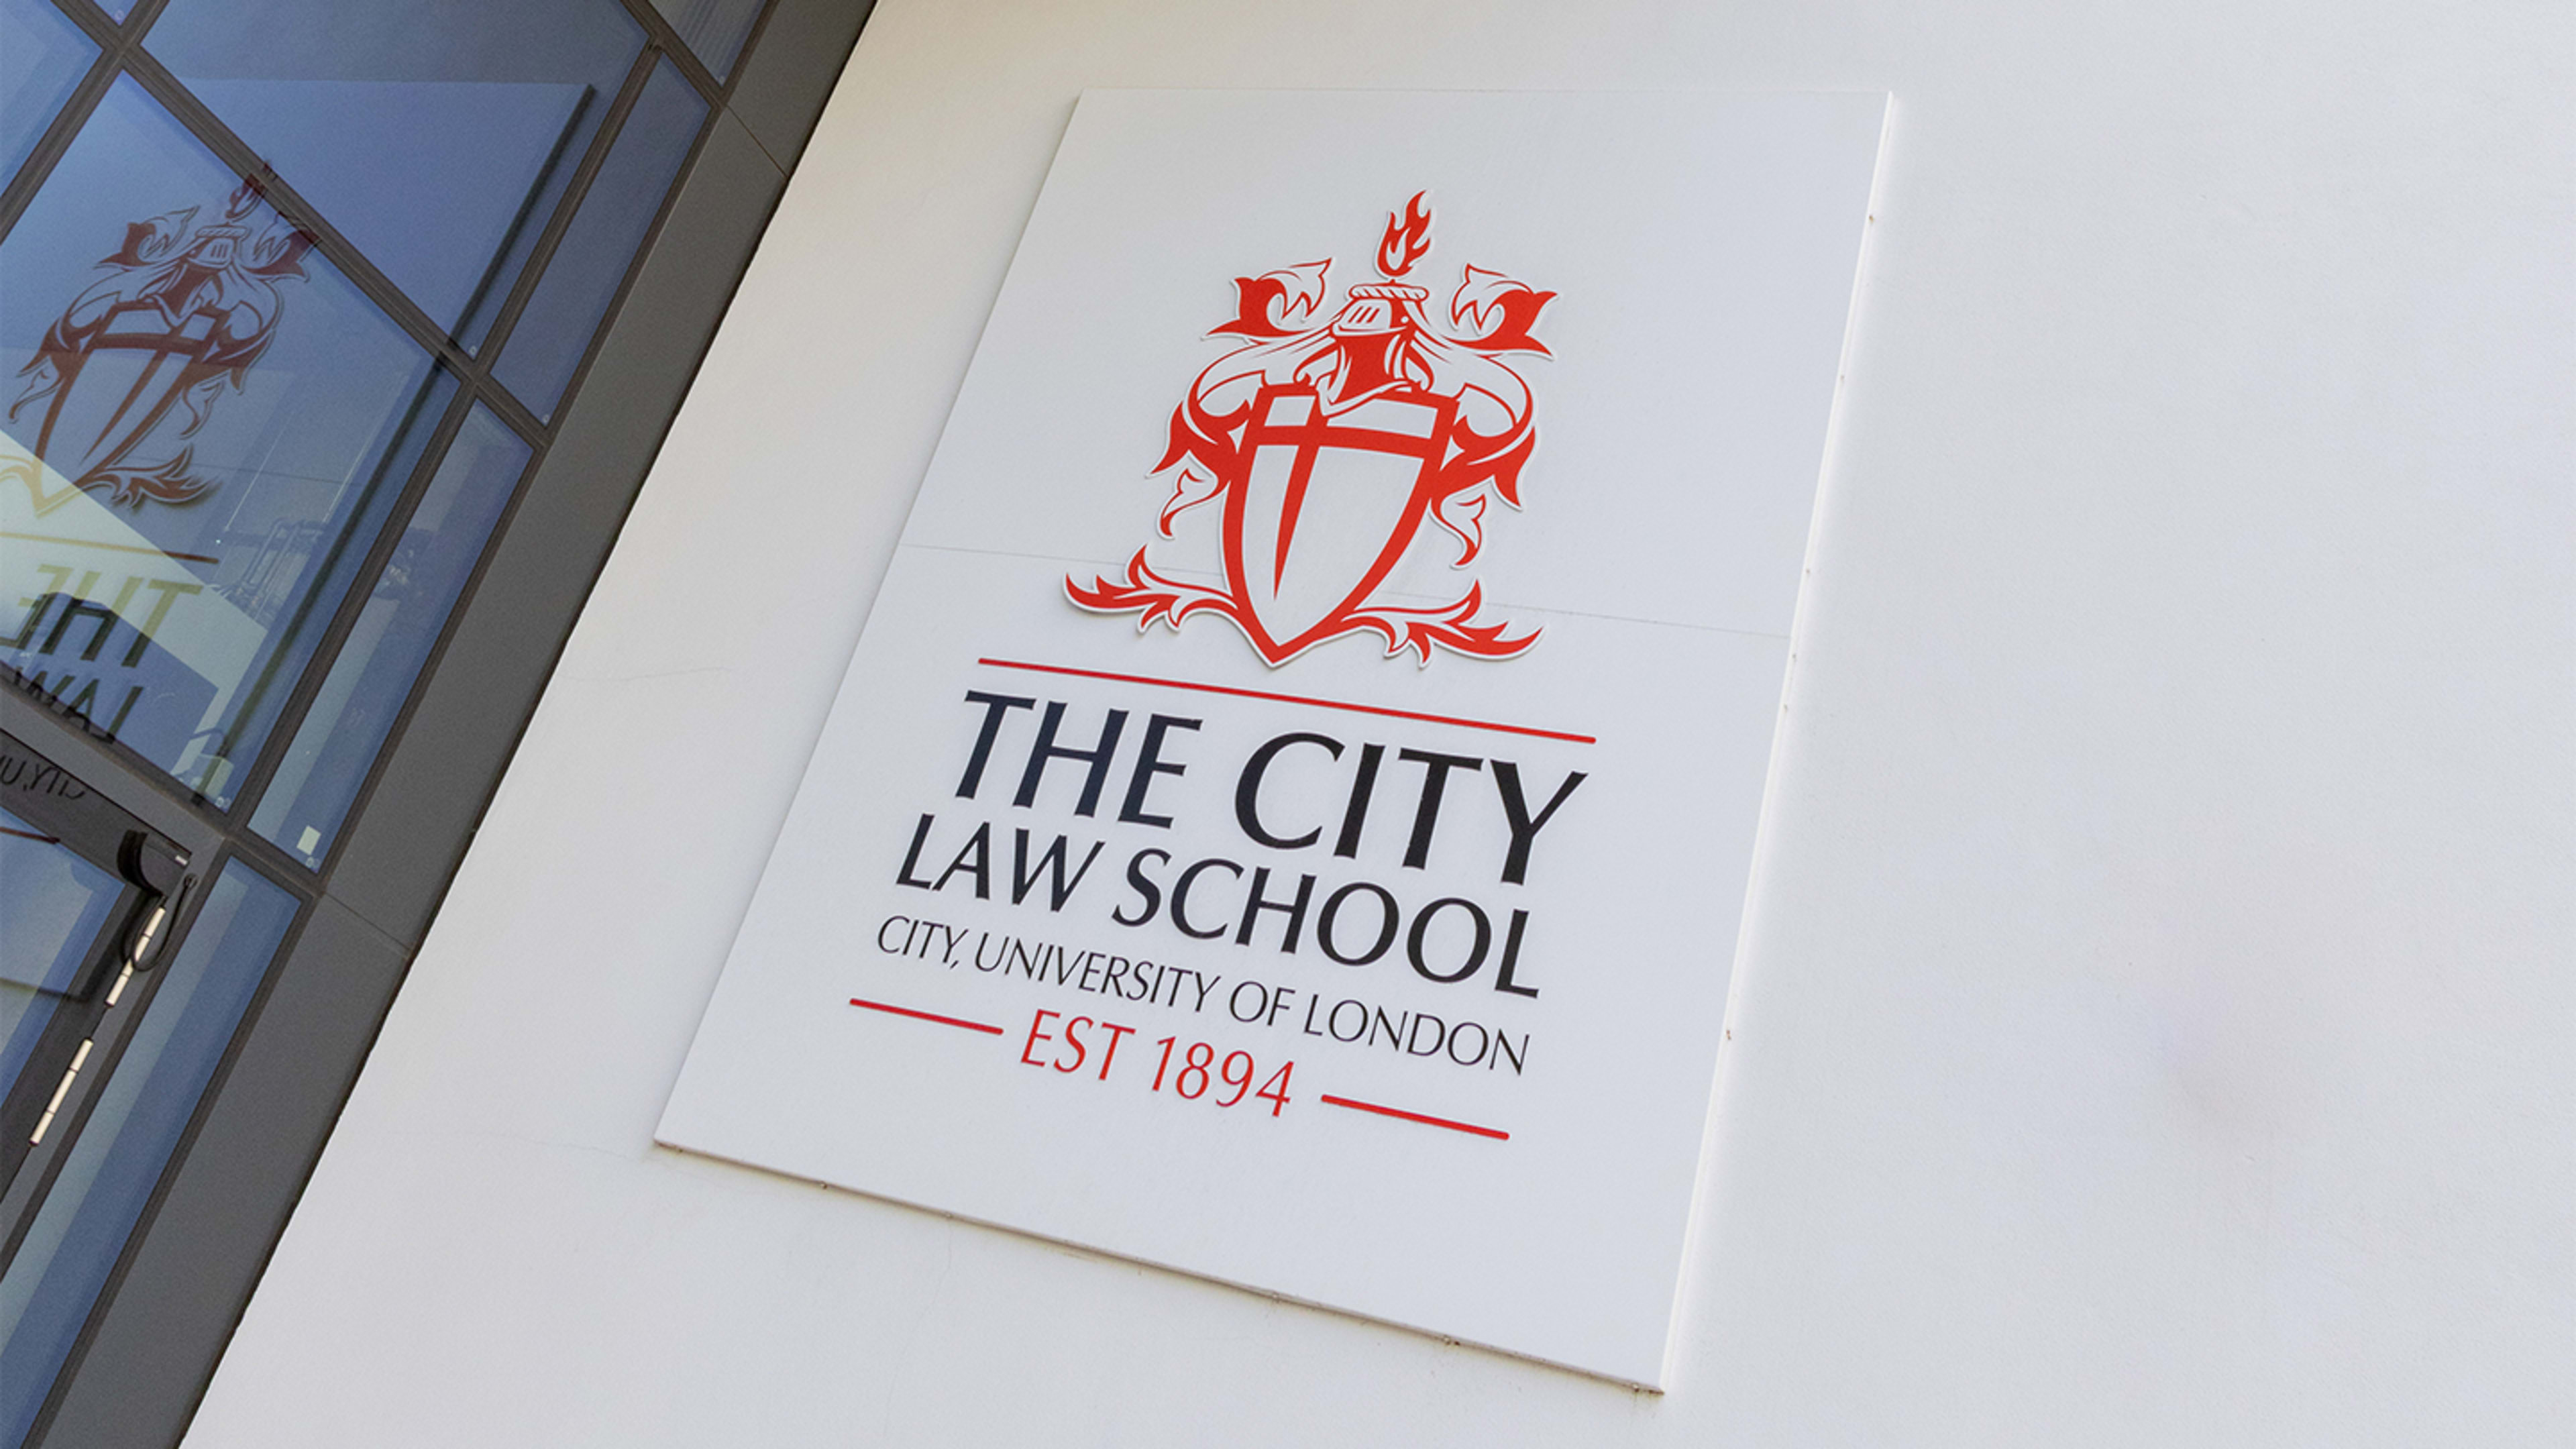 The City Law School